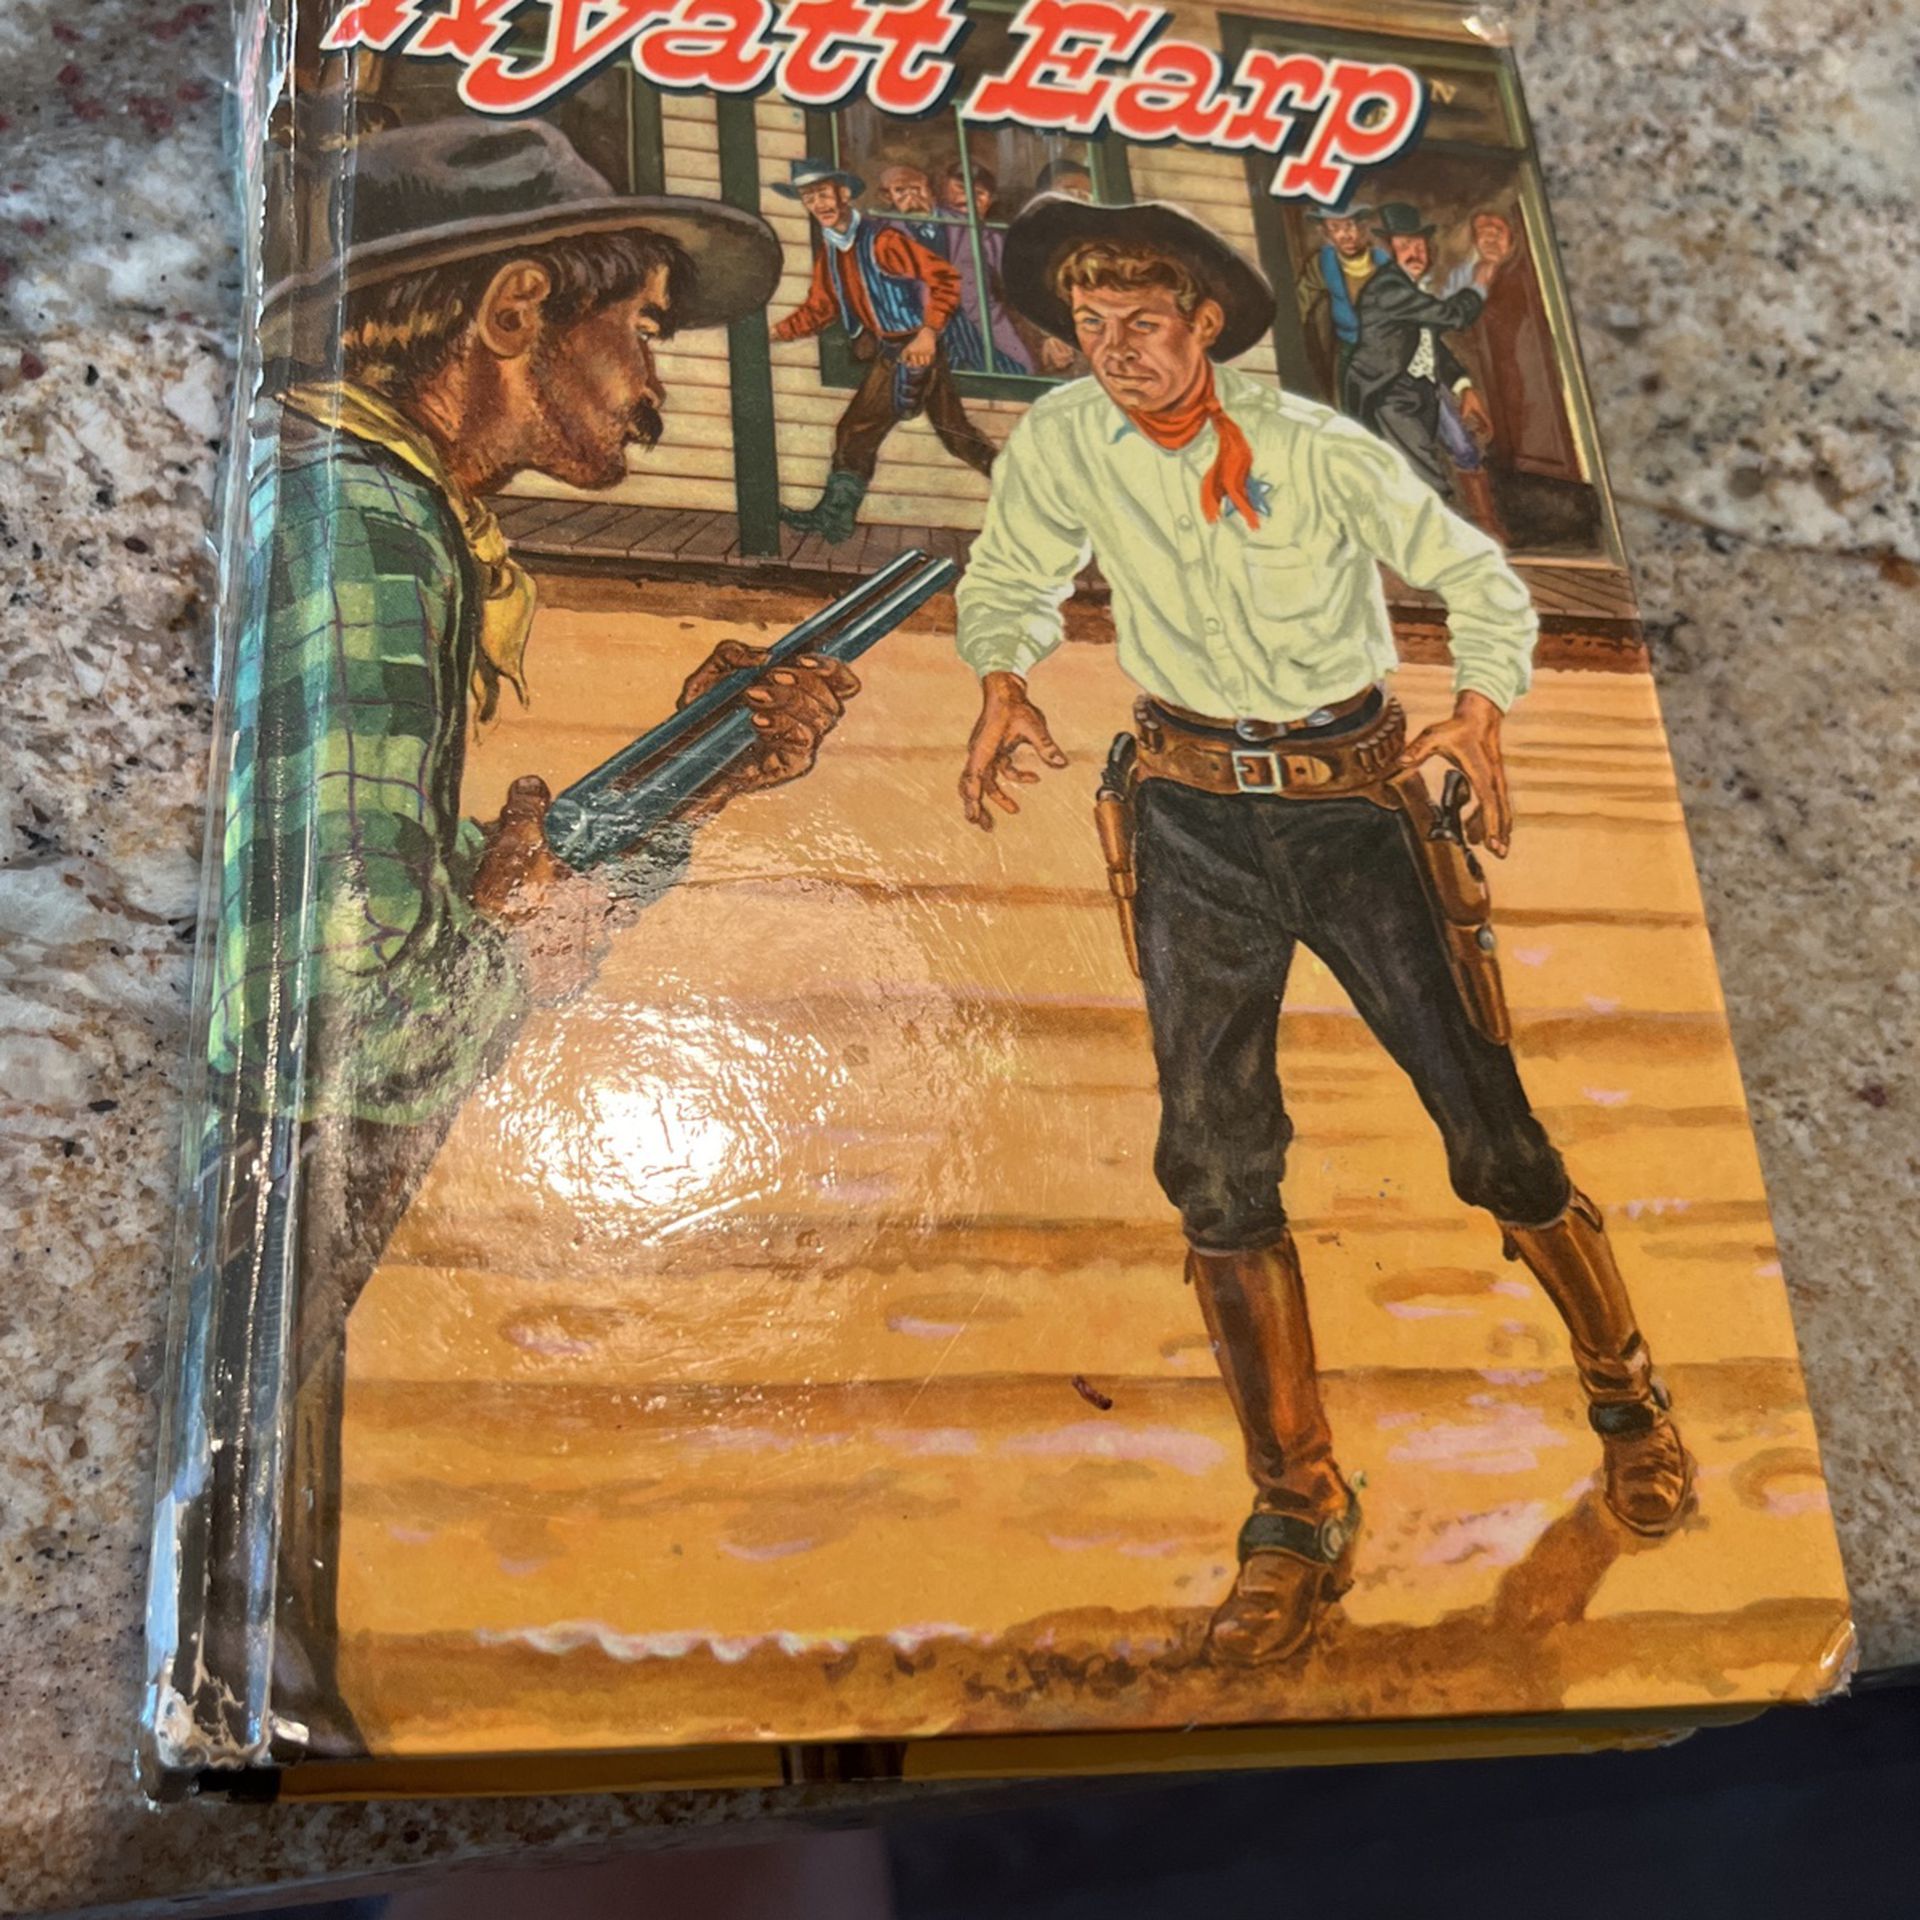 Wyatt Earp 1956 Whitman Publishing Company